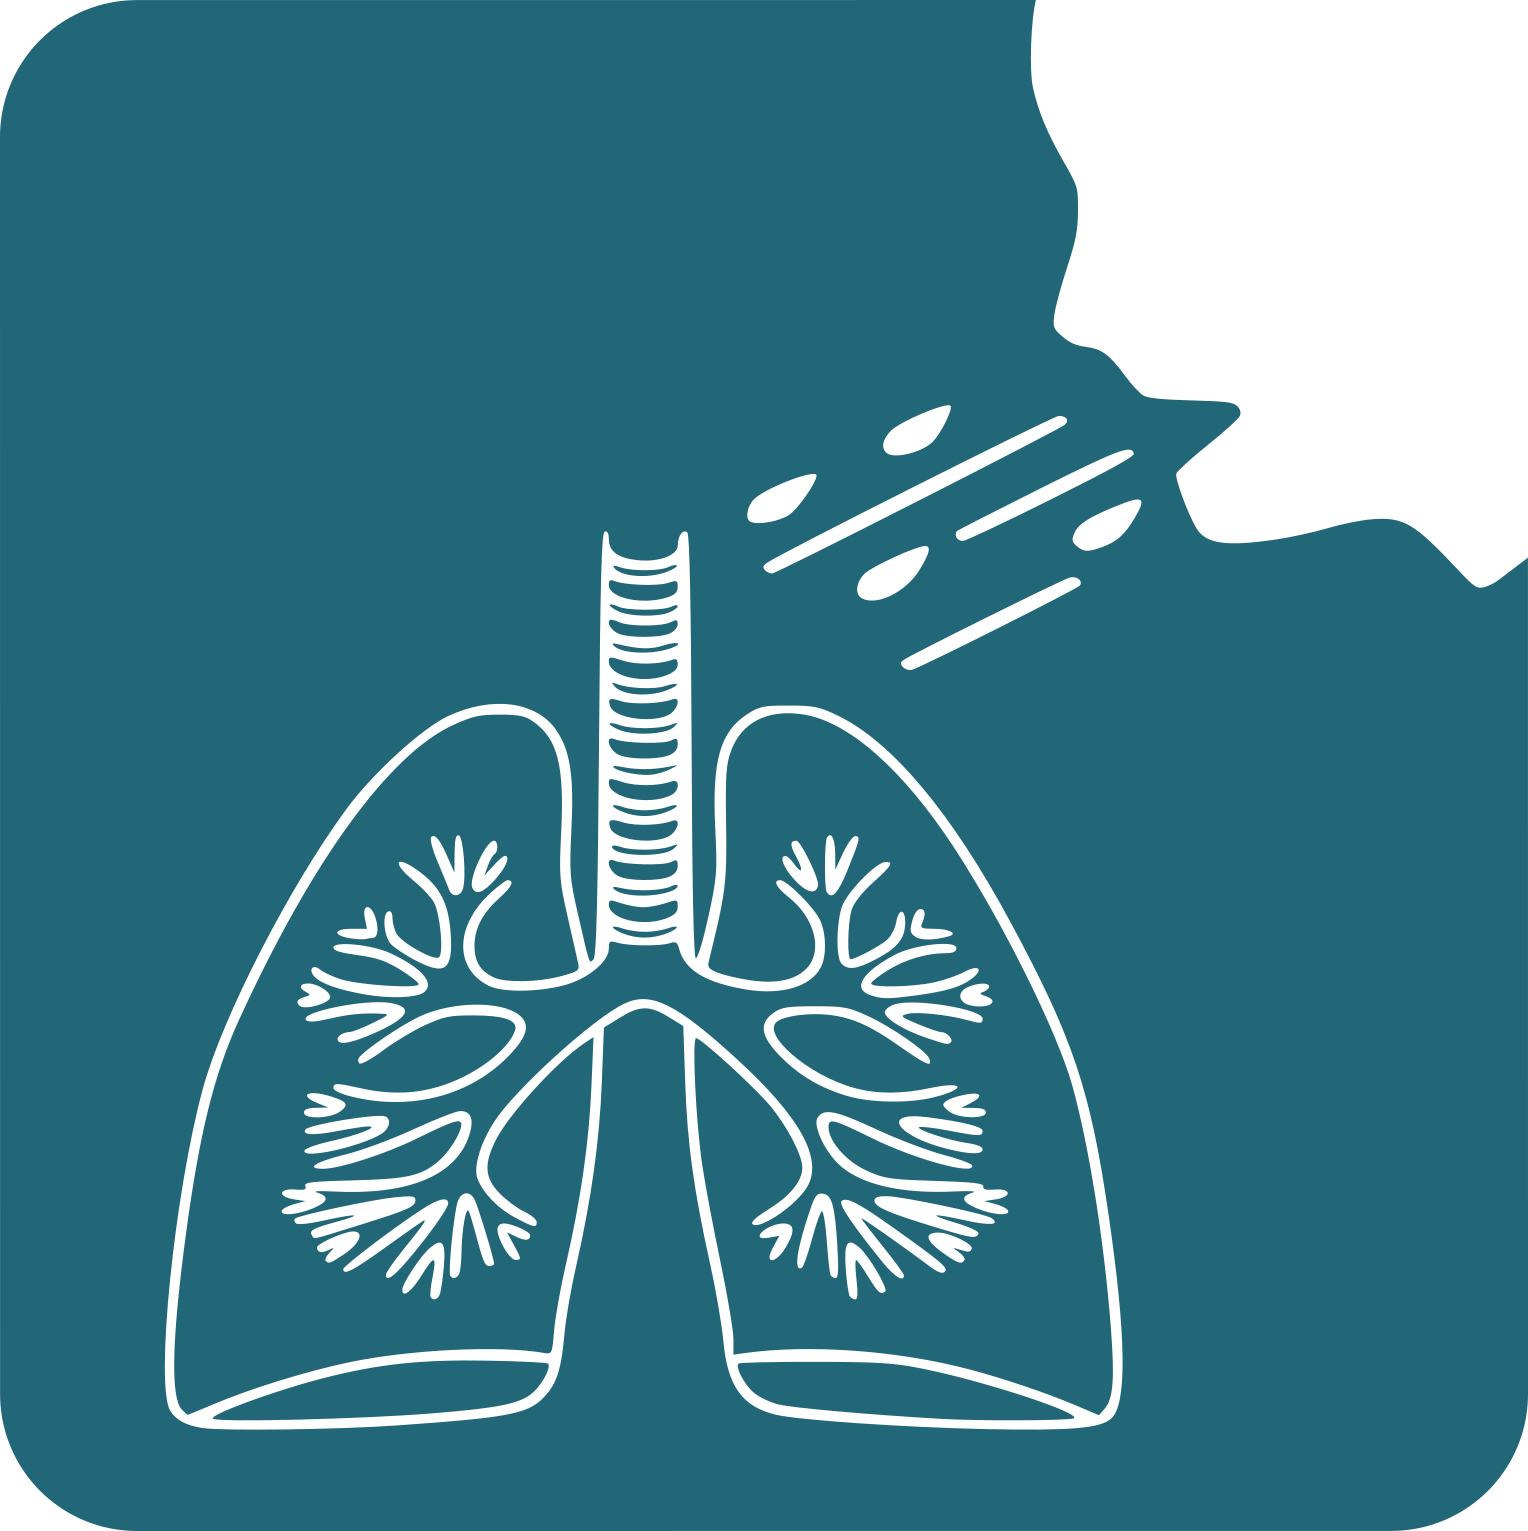 pulmons